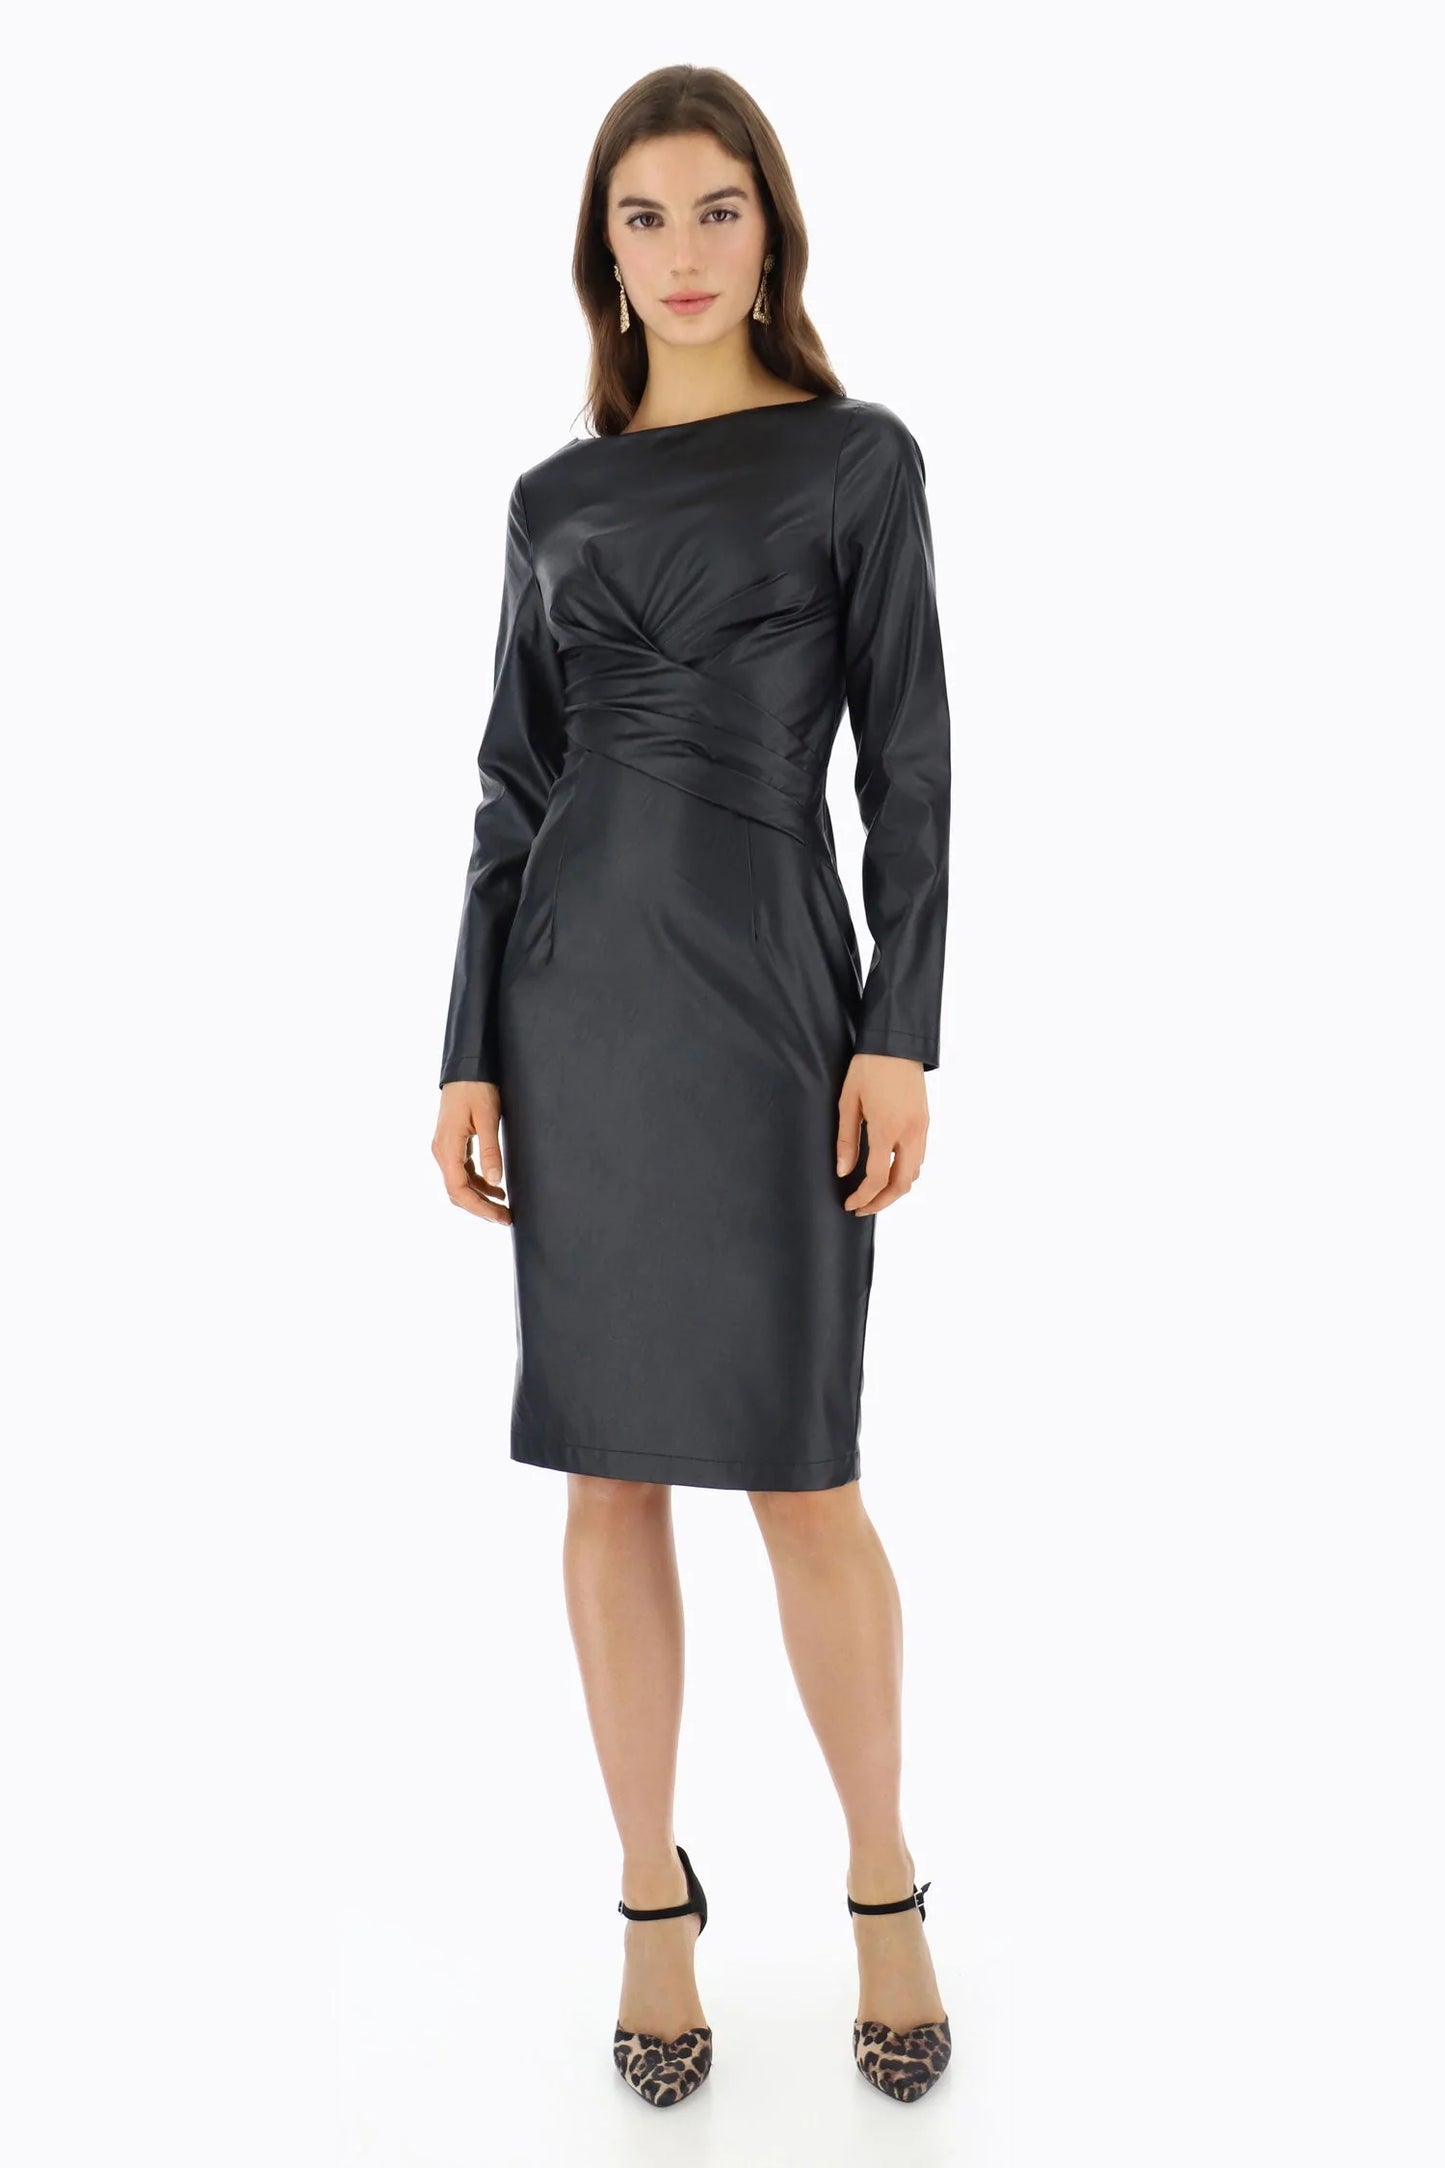 Dress Eco leather slim fit dress Baroc Boutique SMALL / CAMEL / 50%VISCOSE 50%PU